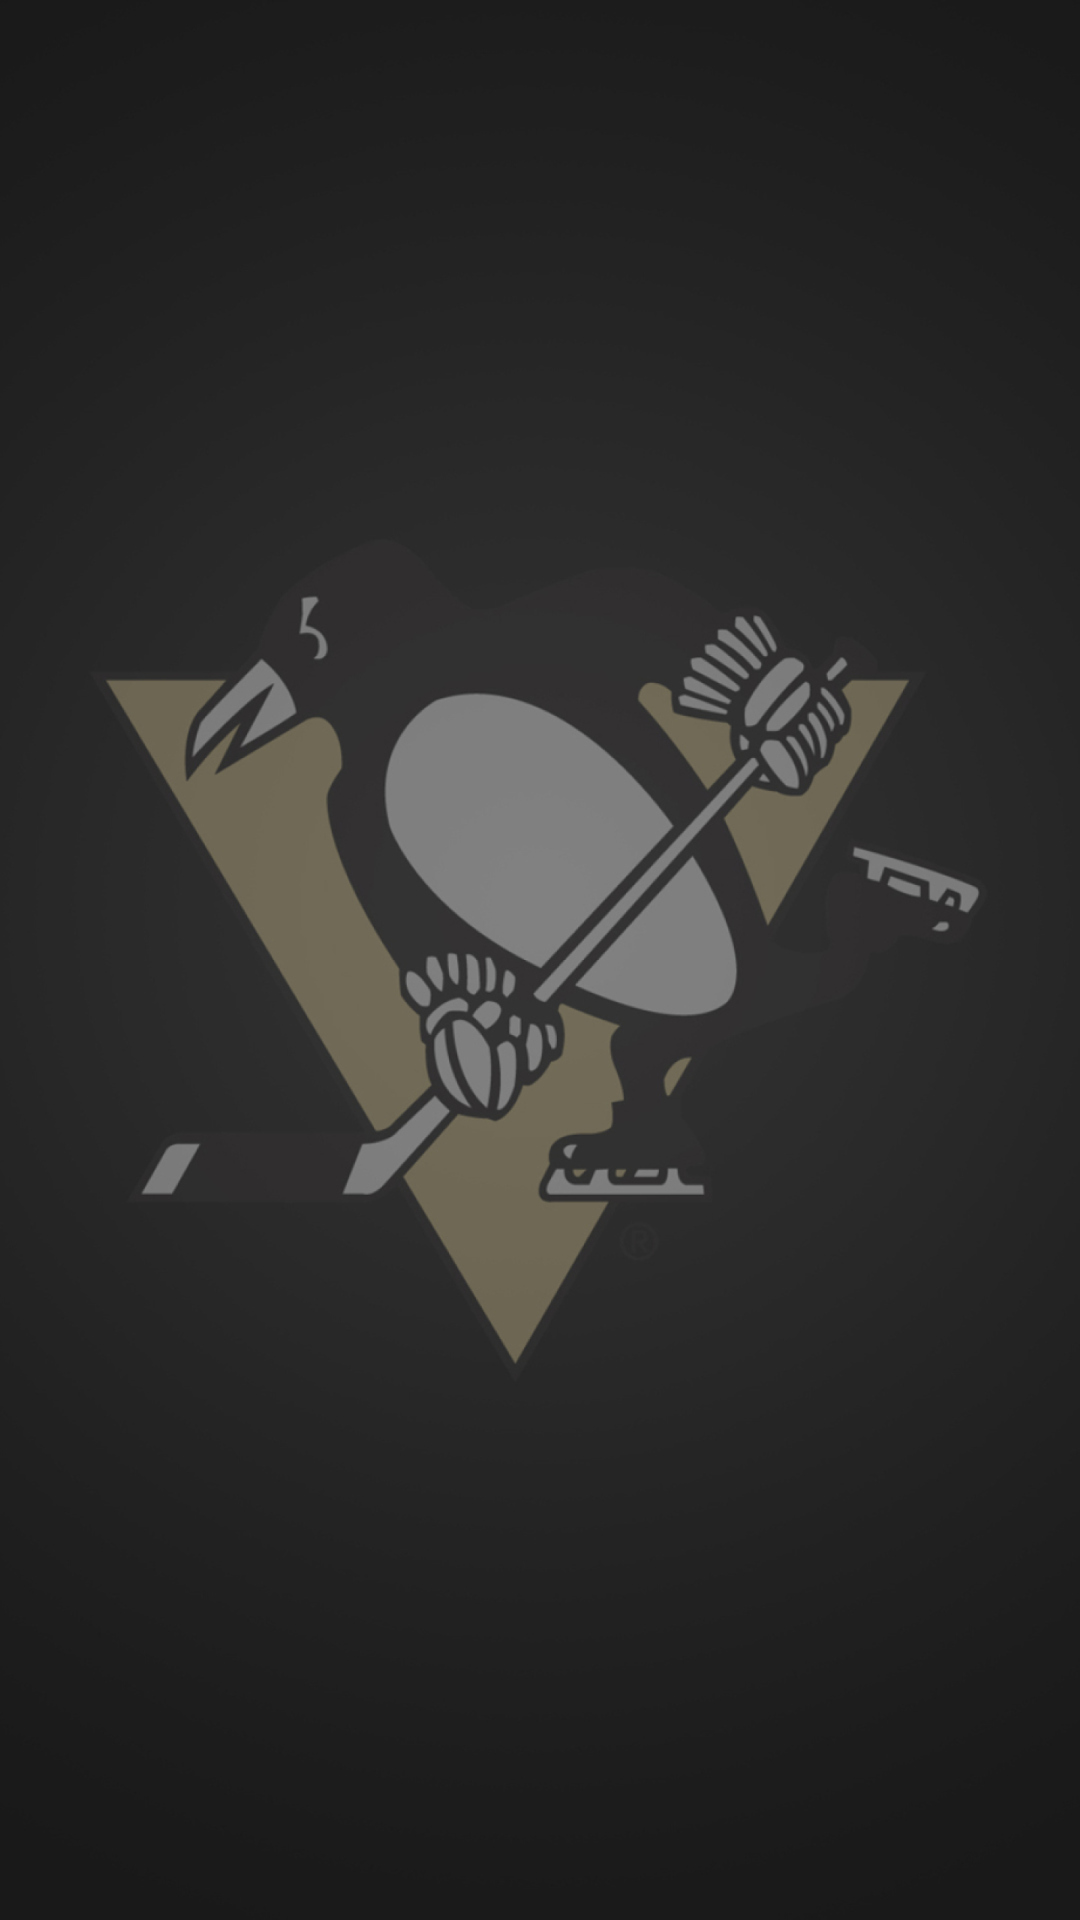 Pittsburgh Penguins wallpaper 1080x1920